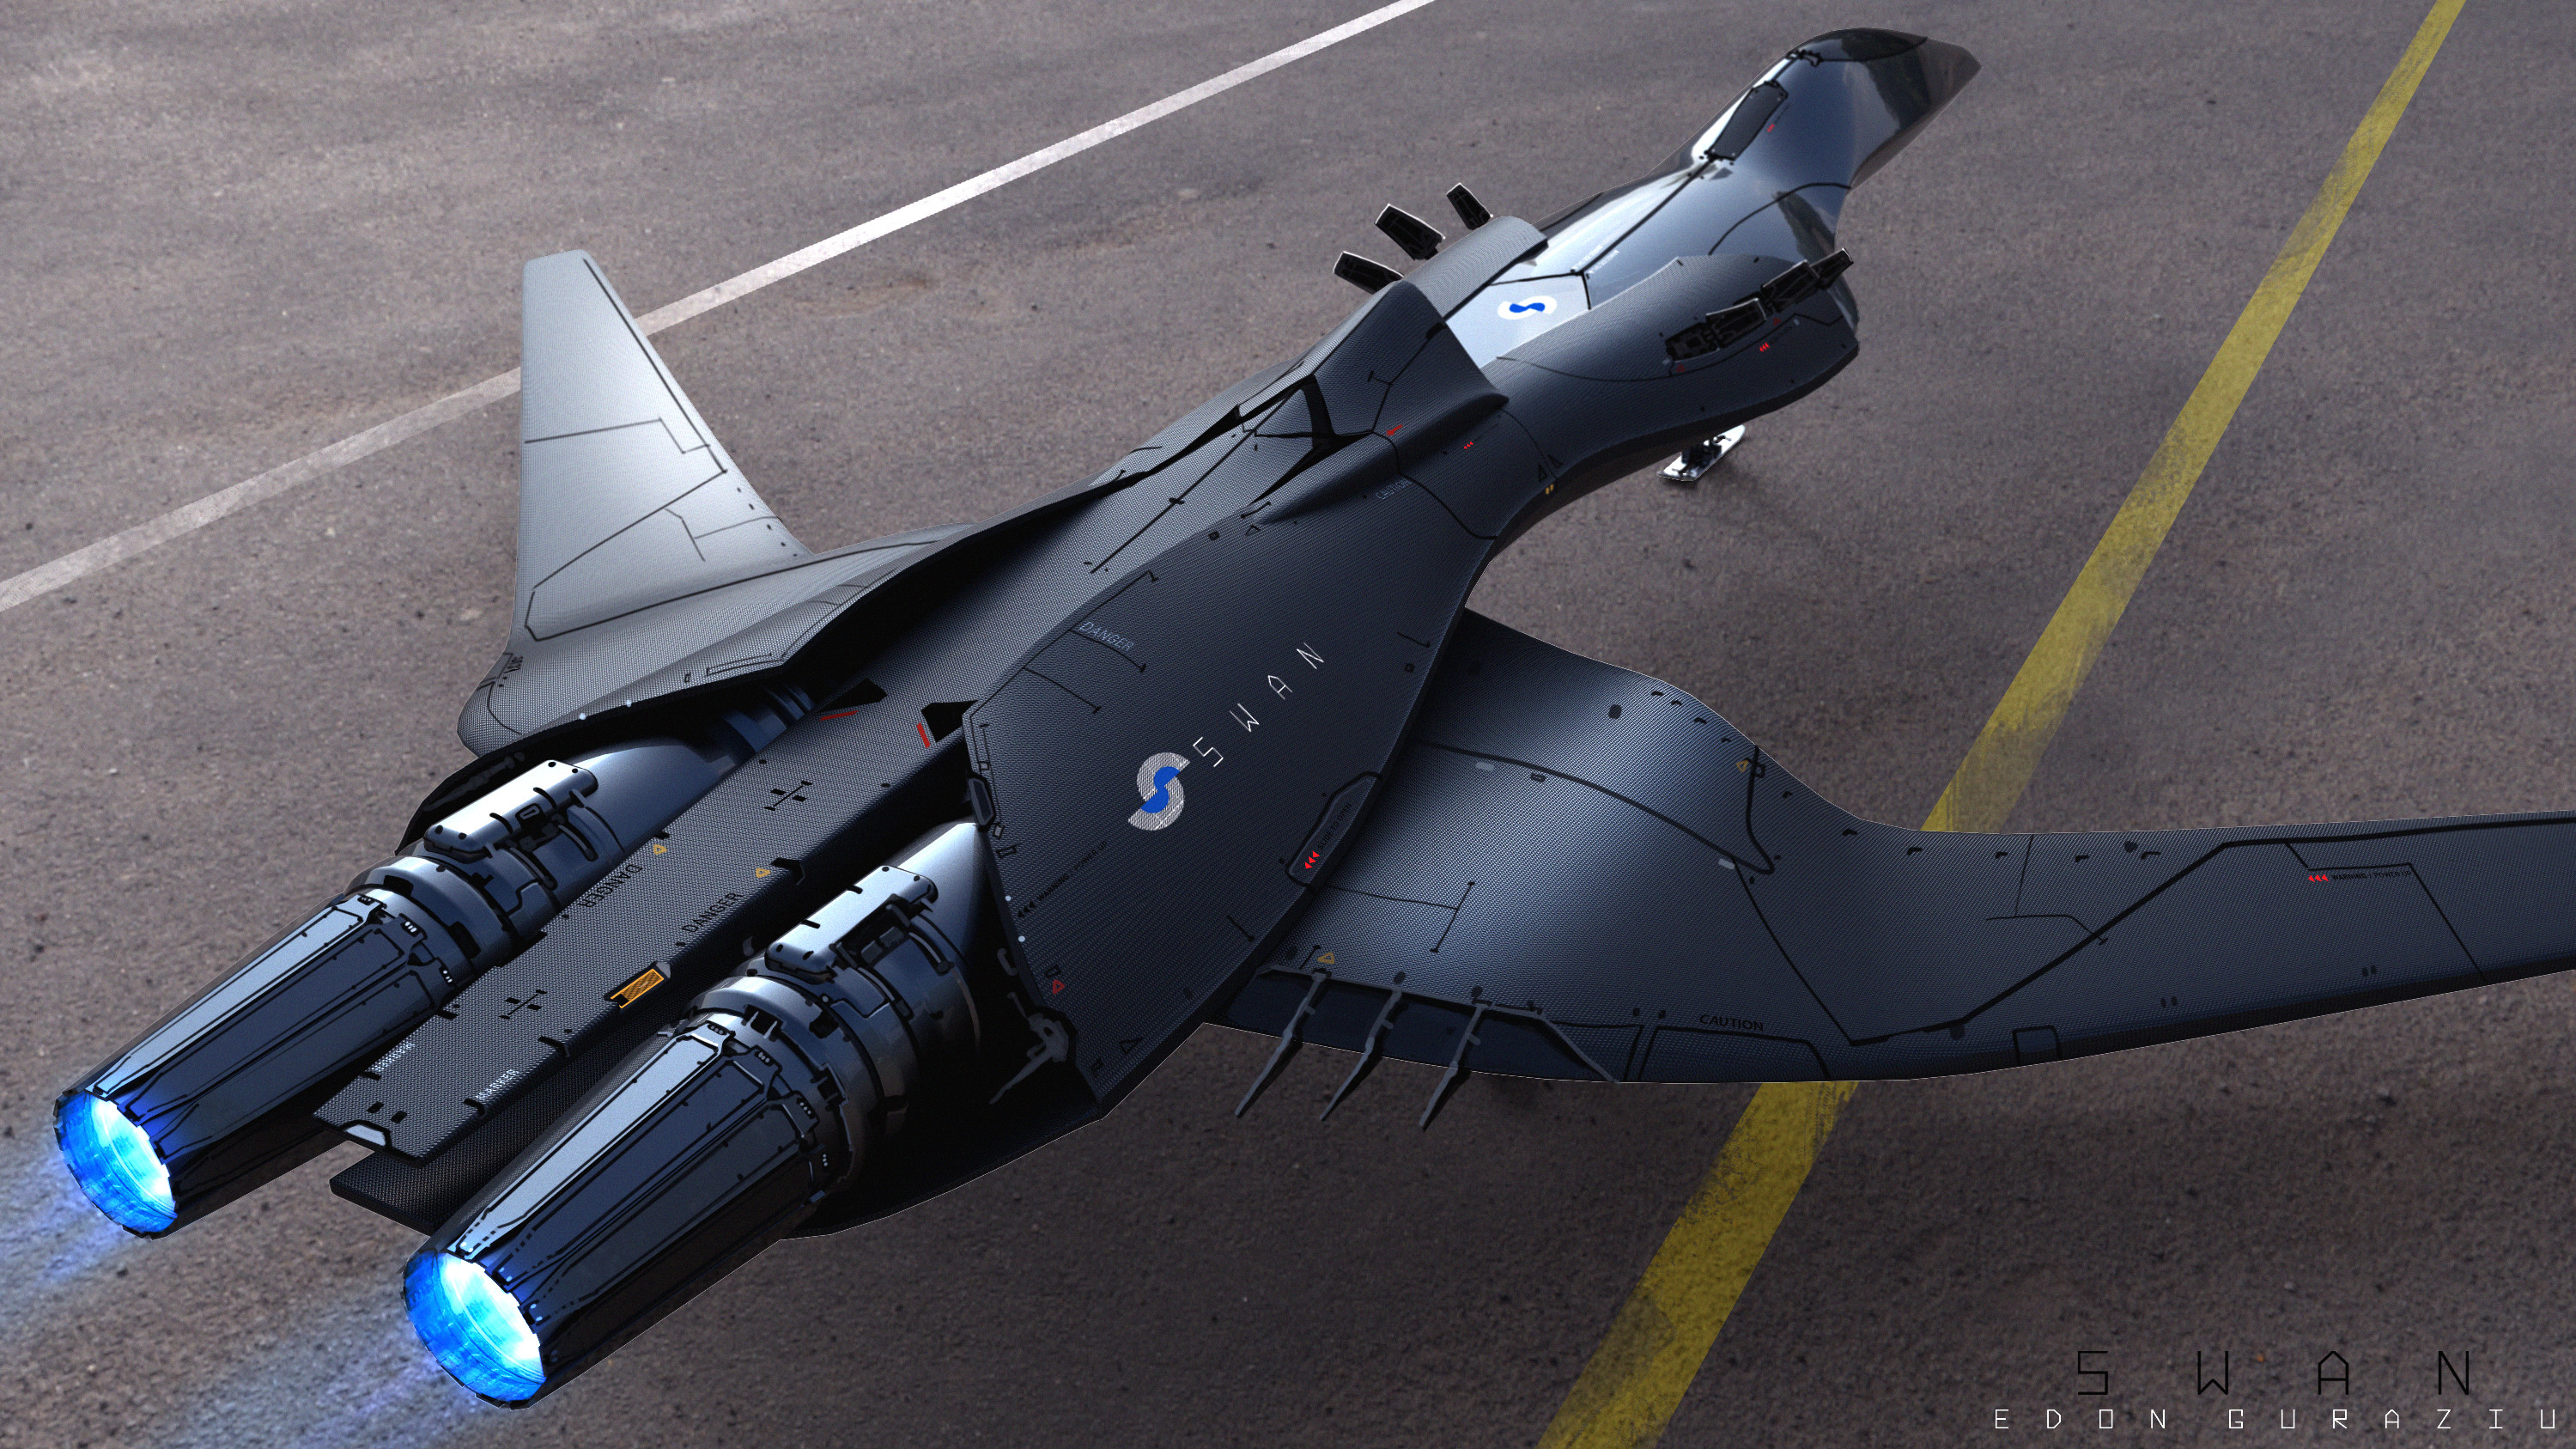 Edon Guraziu Vehicle Science Fiction 3D Space Render Jets 3000x1687